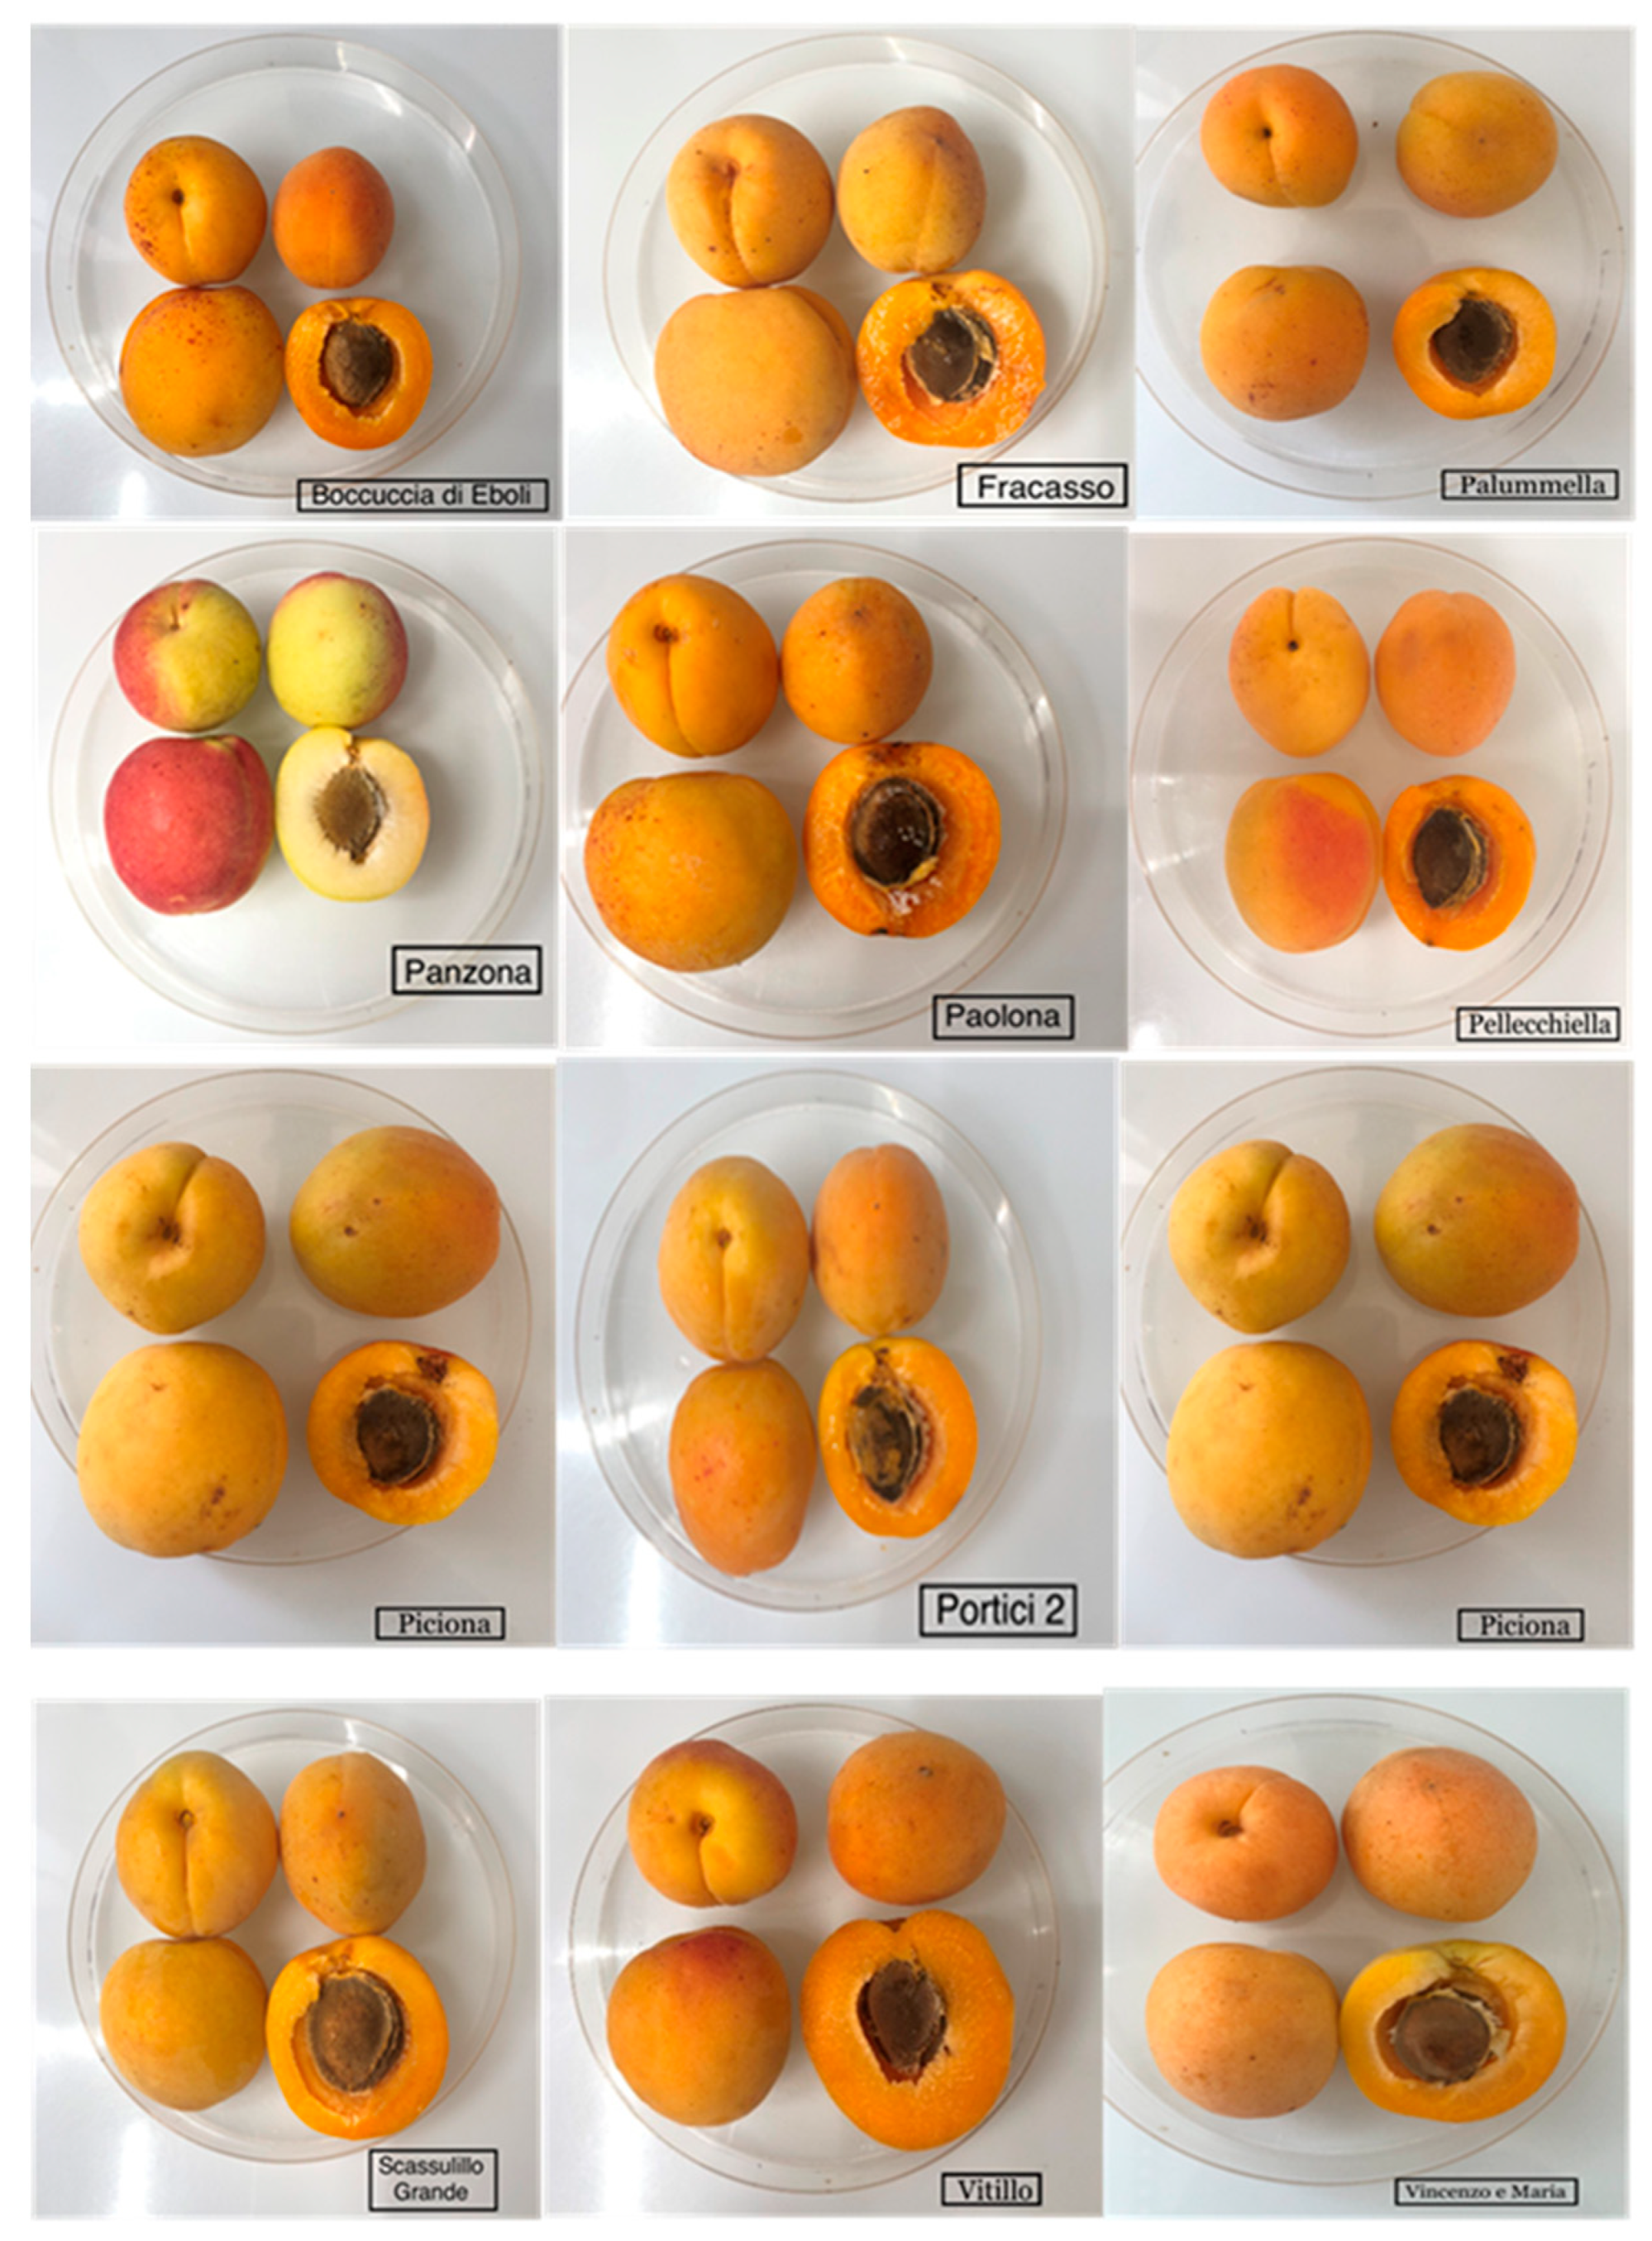 Apricot Fruit Size